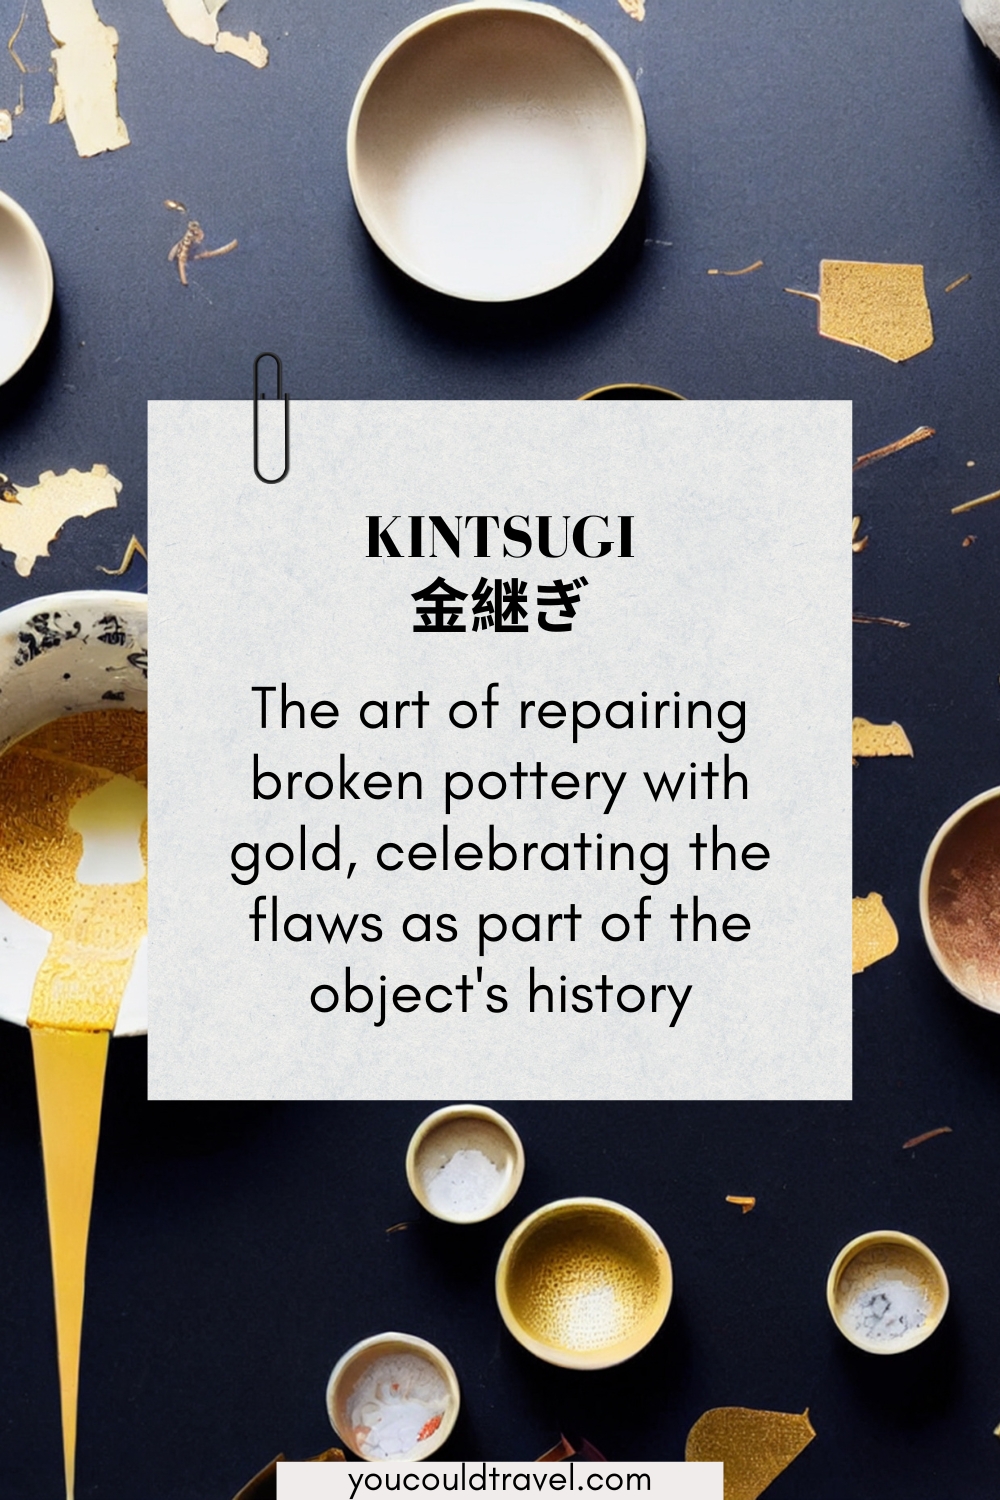 Kintsugi - Japanese word for the art of repairing